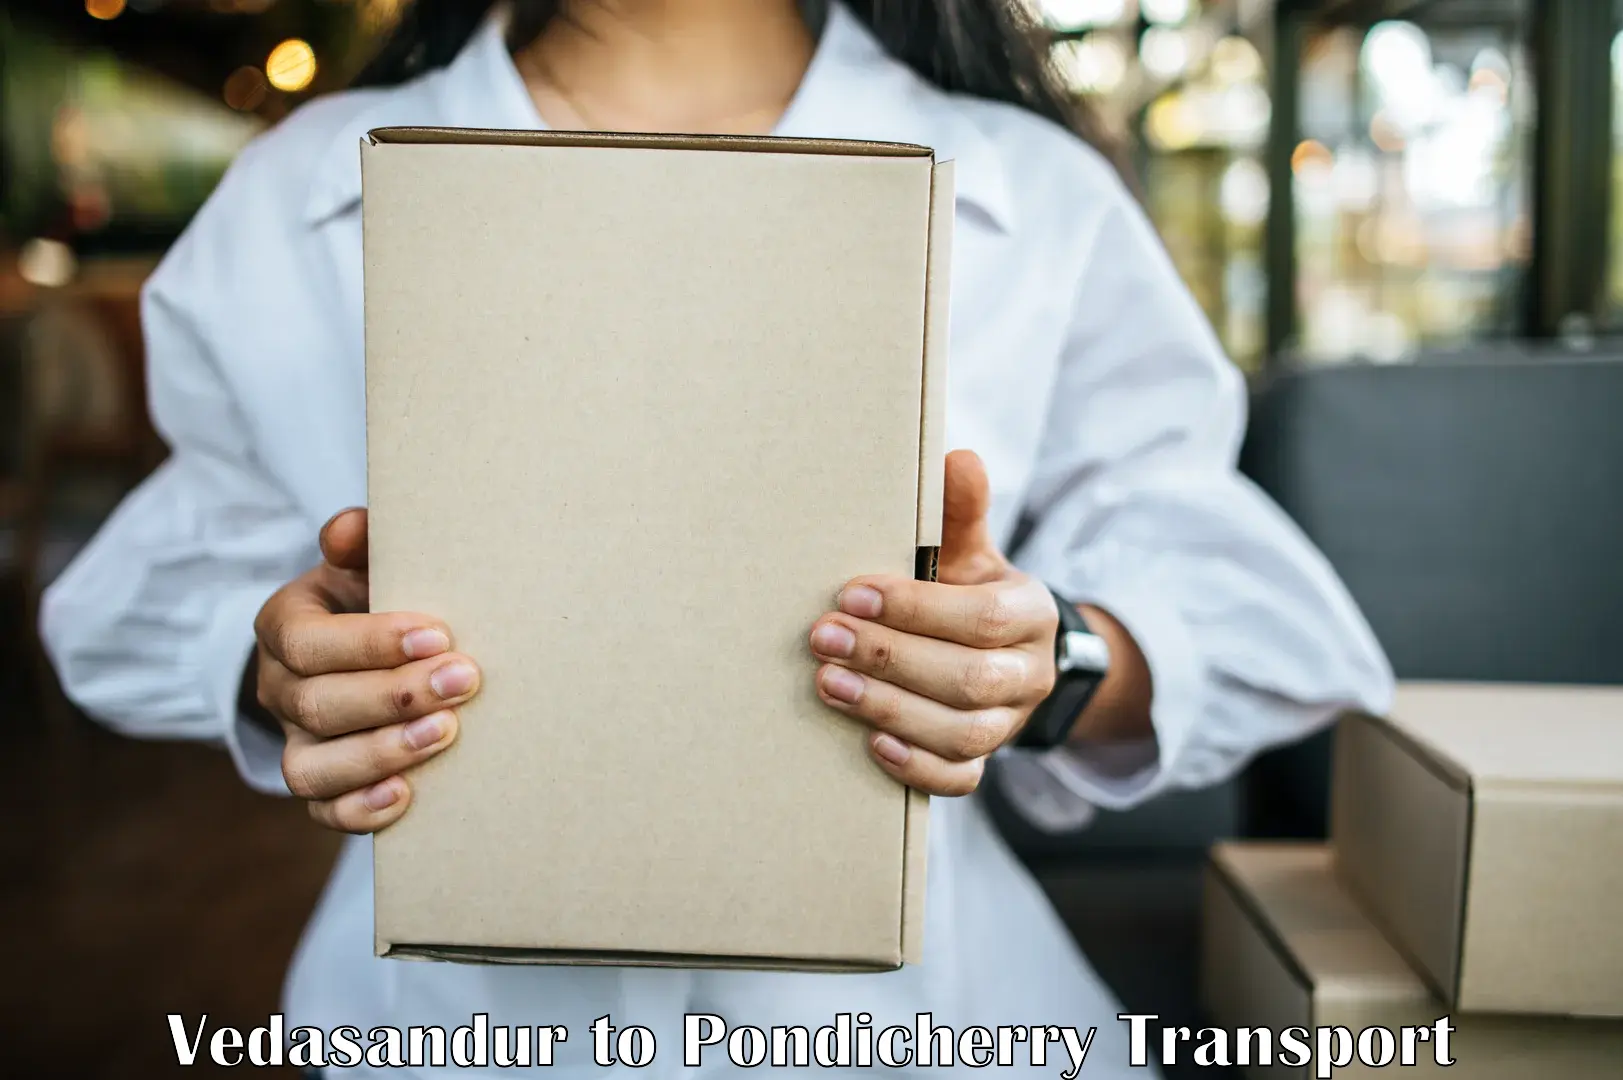 Commercial transport service Vedasandur to Pondicherry